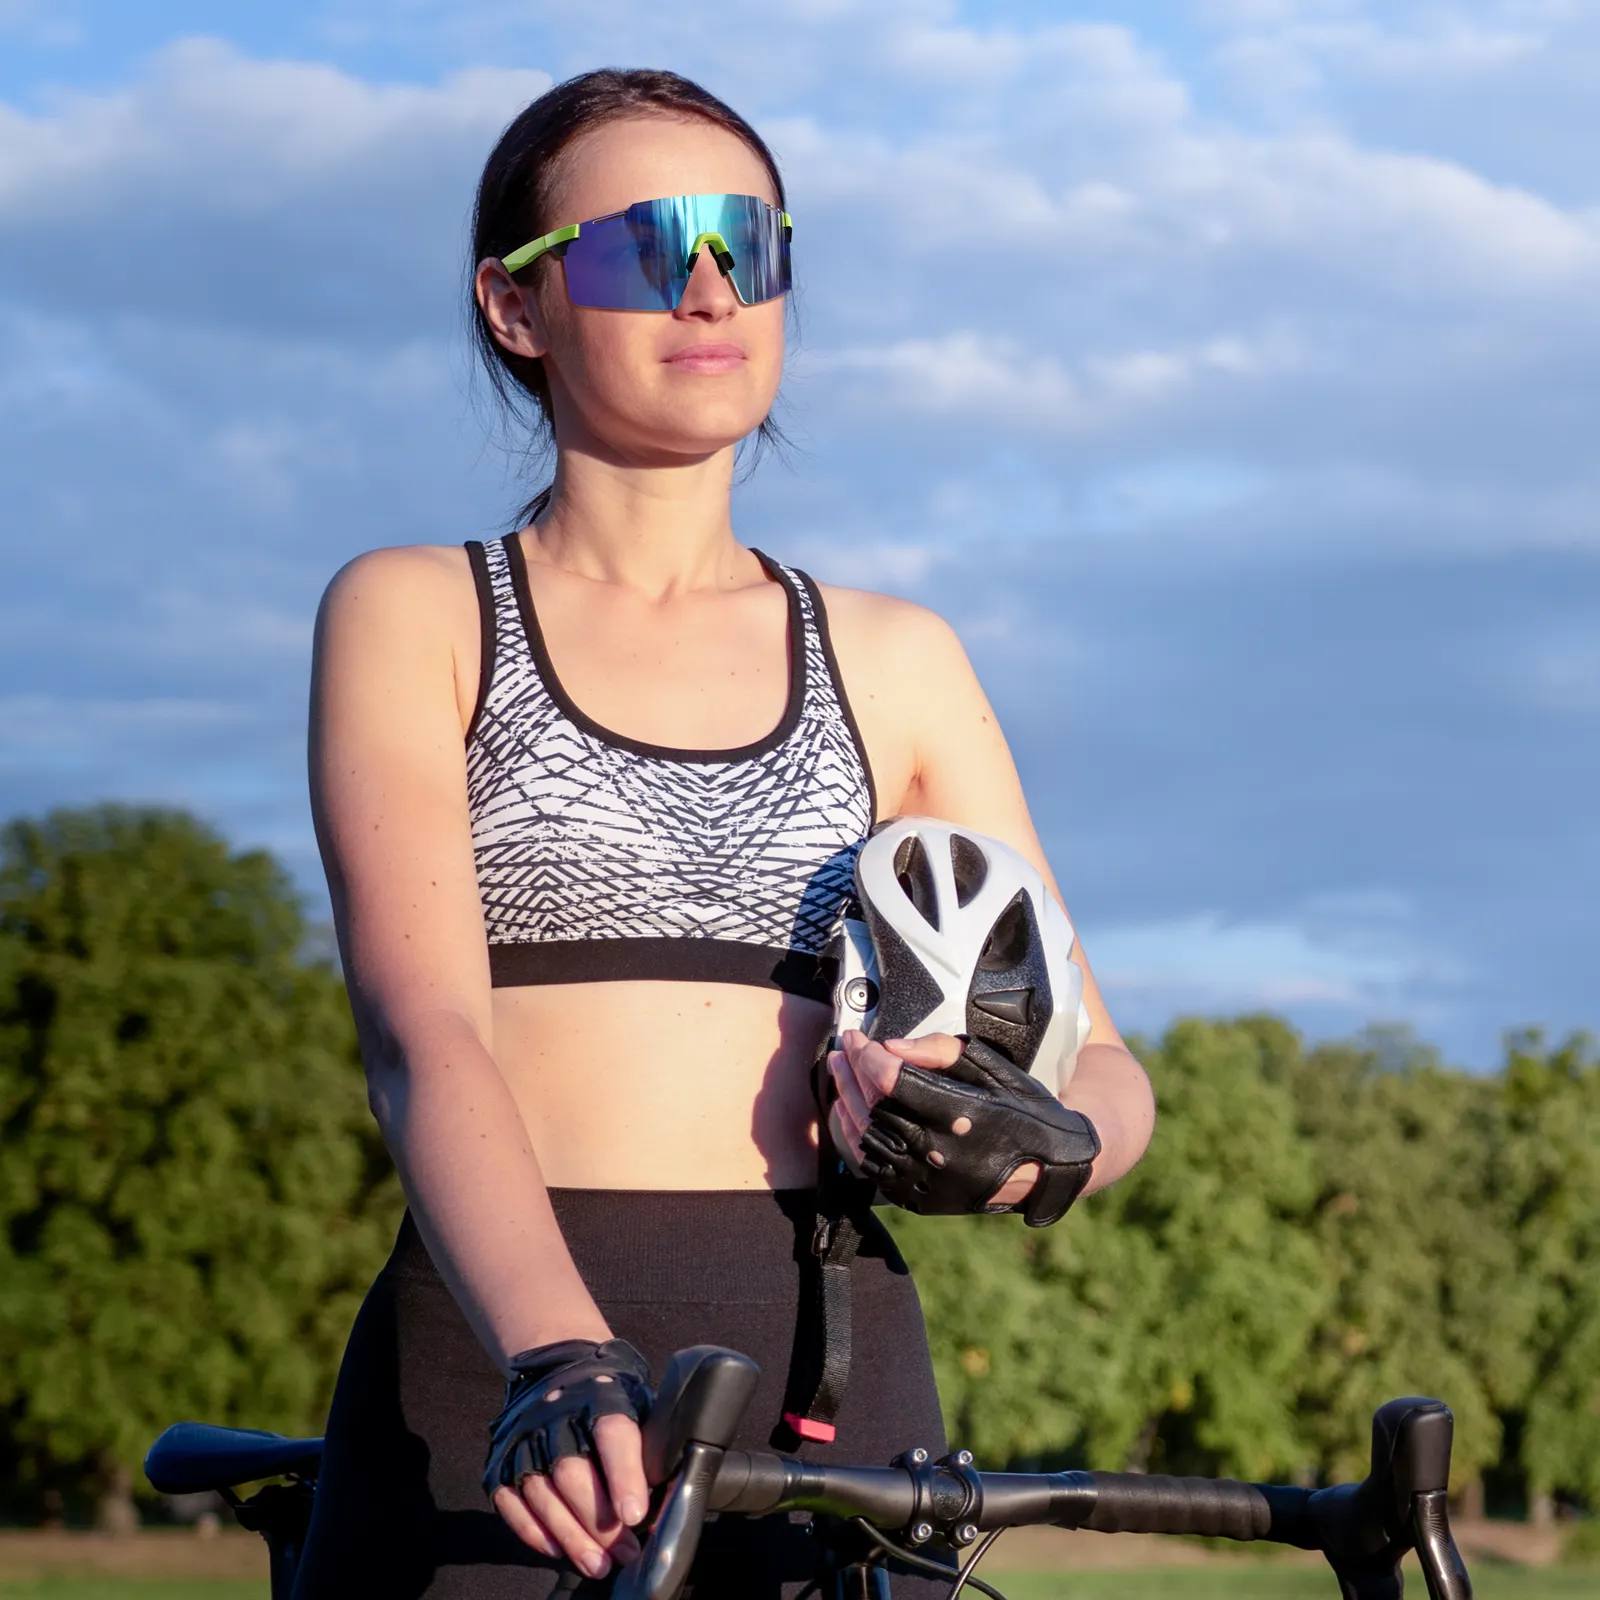 Kacamata hitam olahraga lari sepeda gunung, kacamata hitam olahraga sepeda tanpa bingkai biru untuk pria